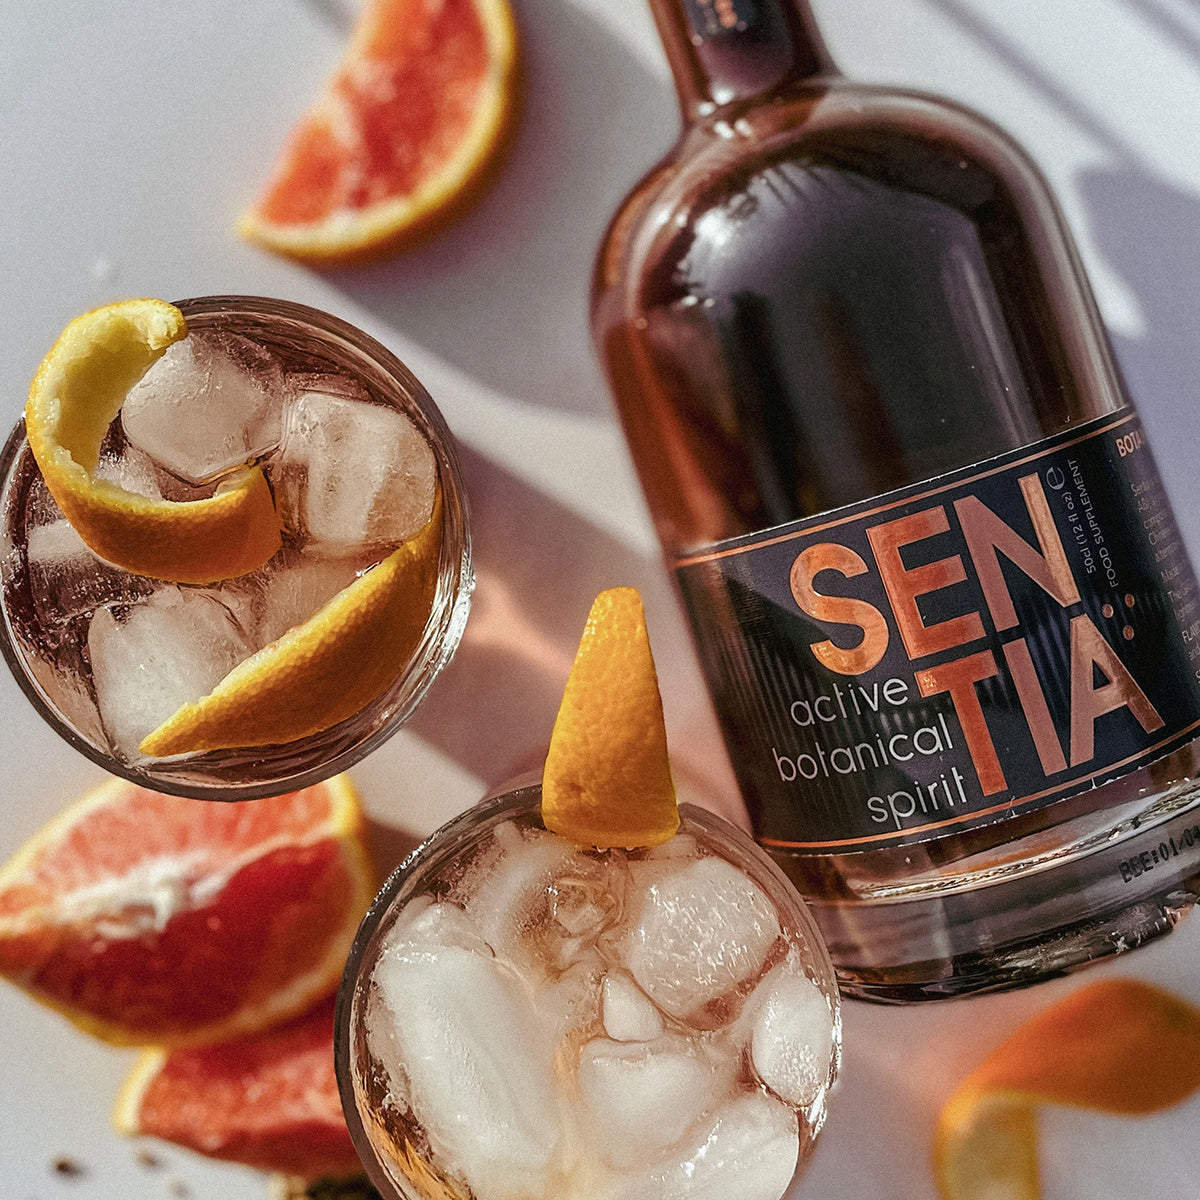 Fruity Sentia Bottle - 500ml